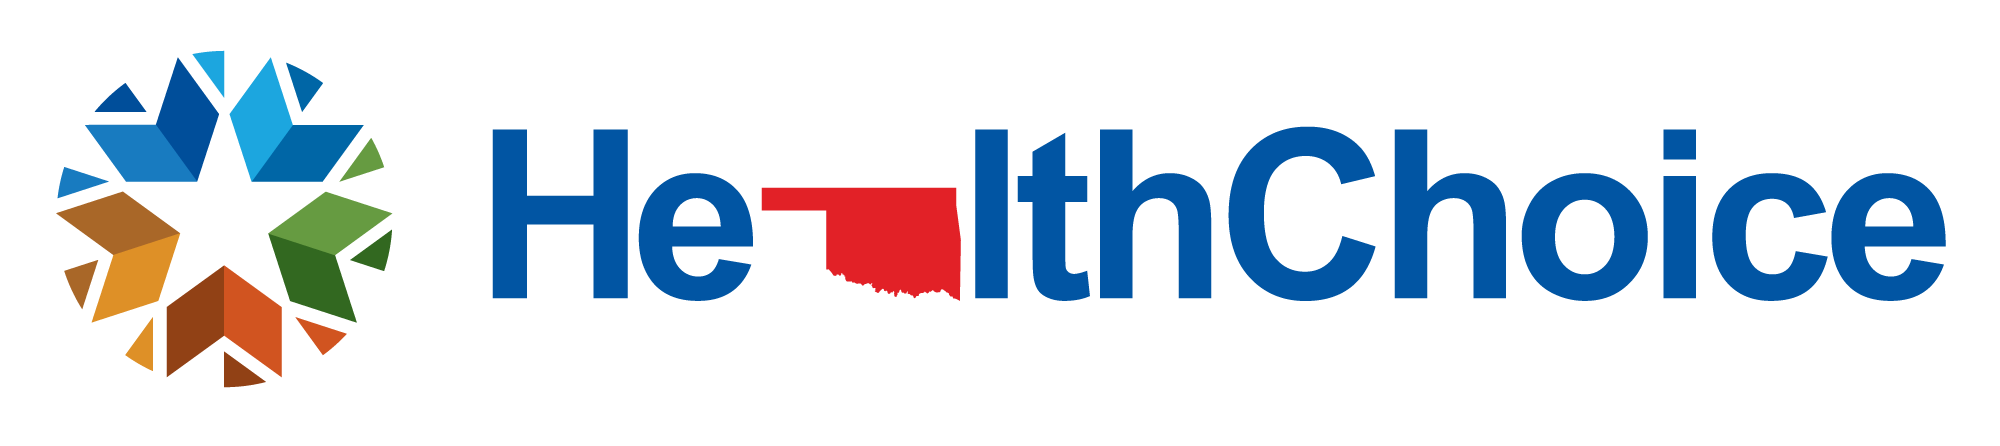 HealthChoice logo